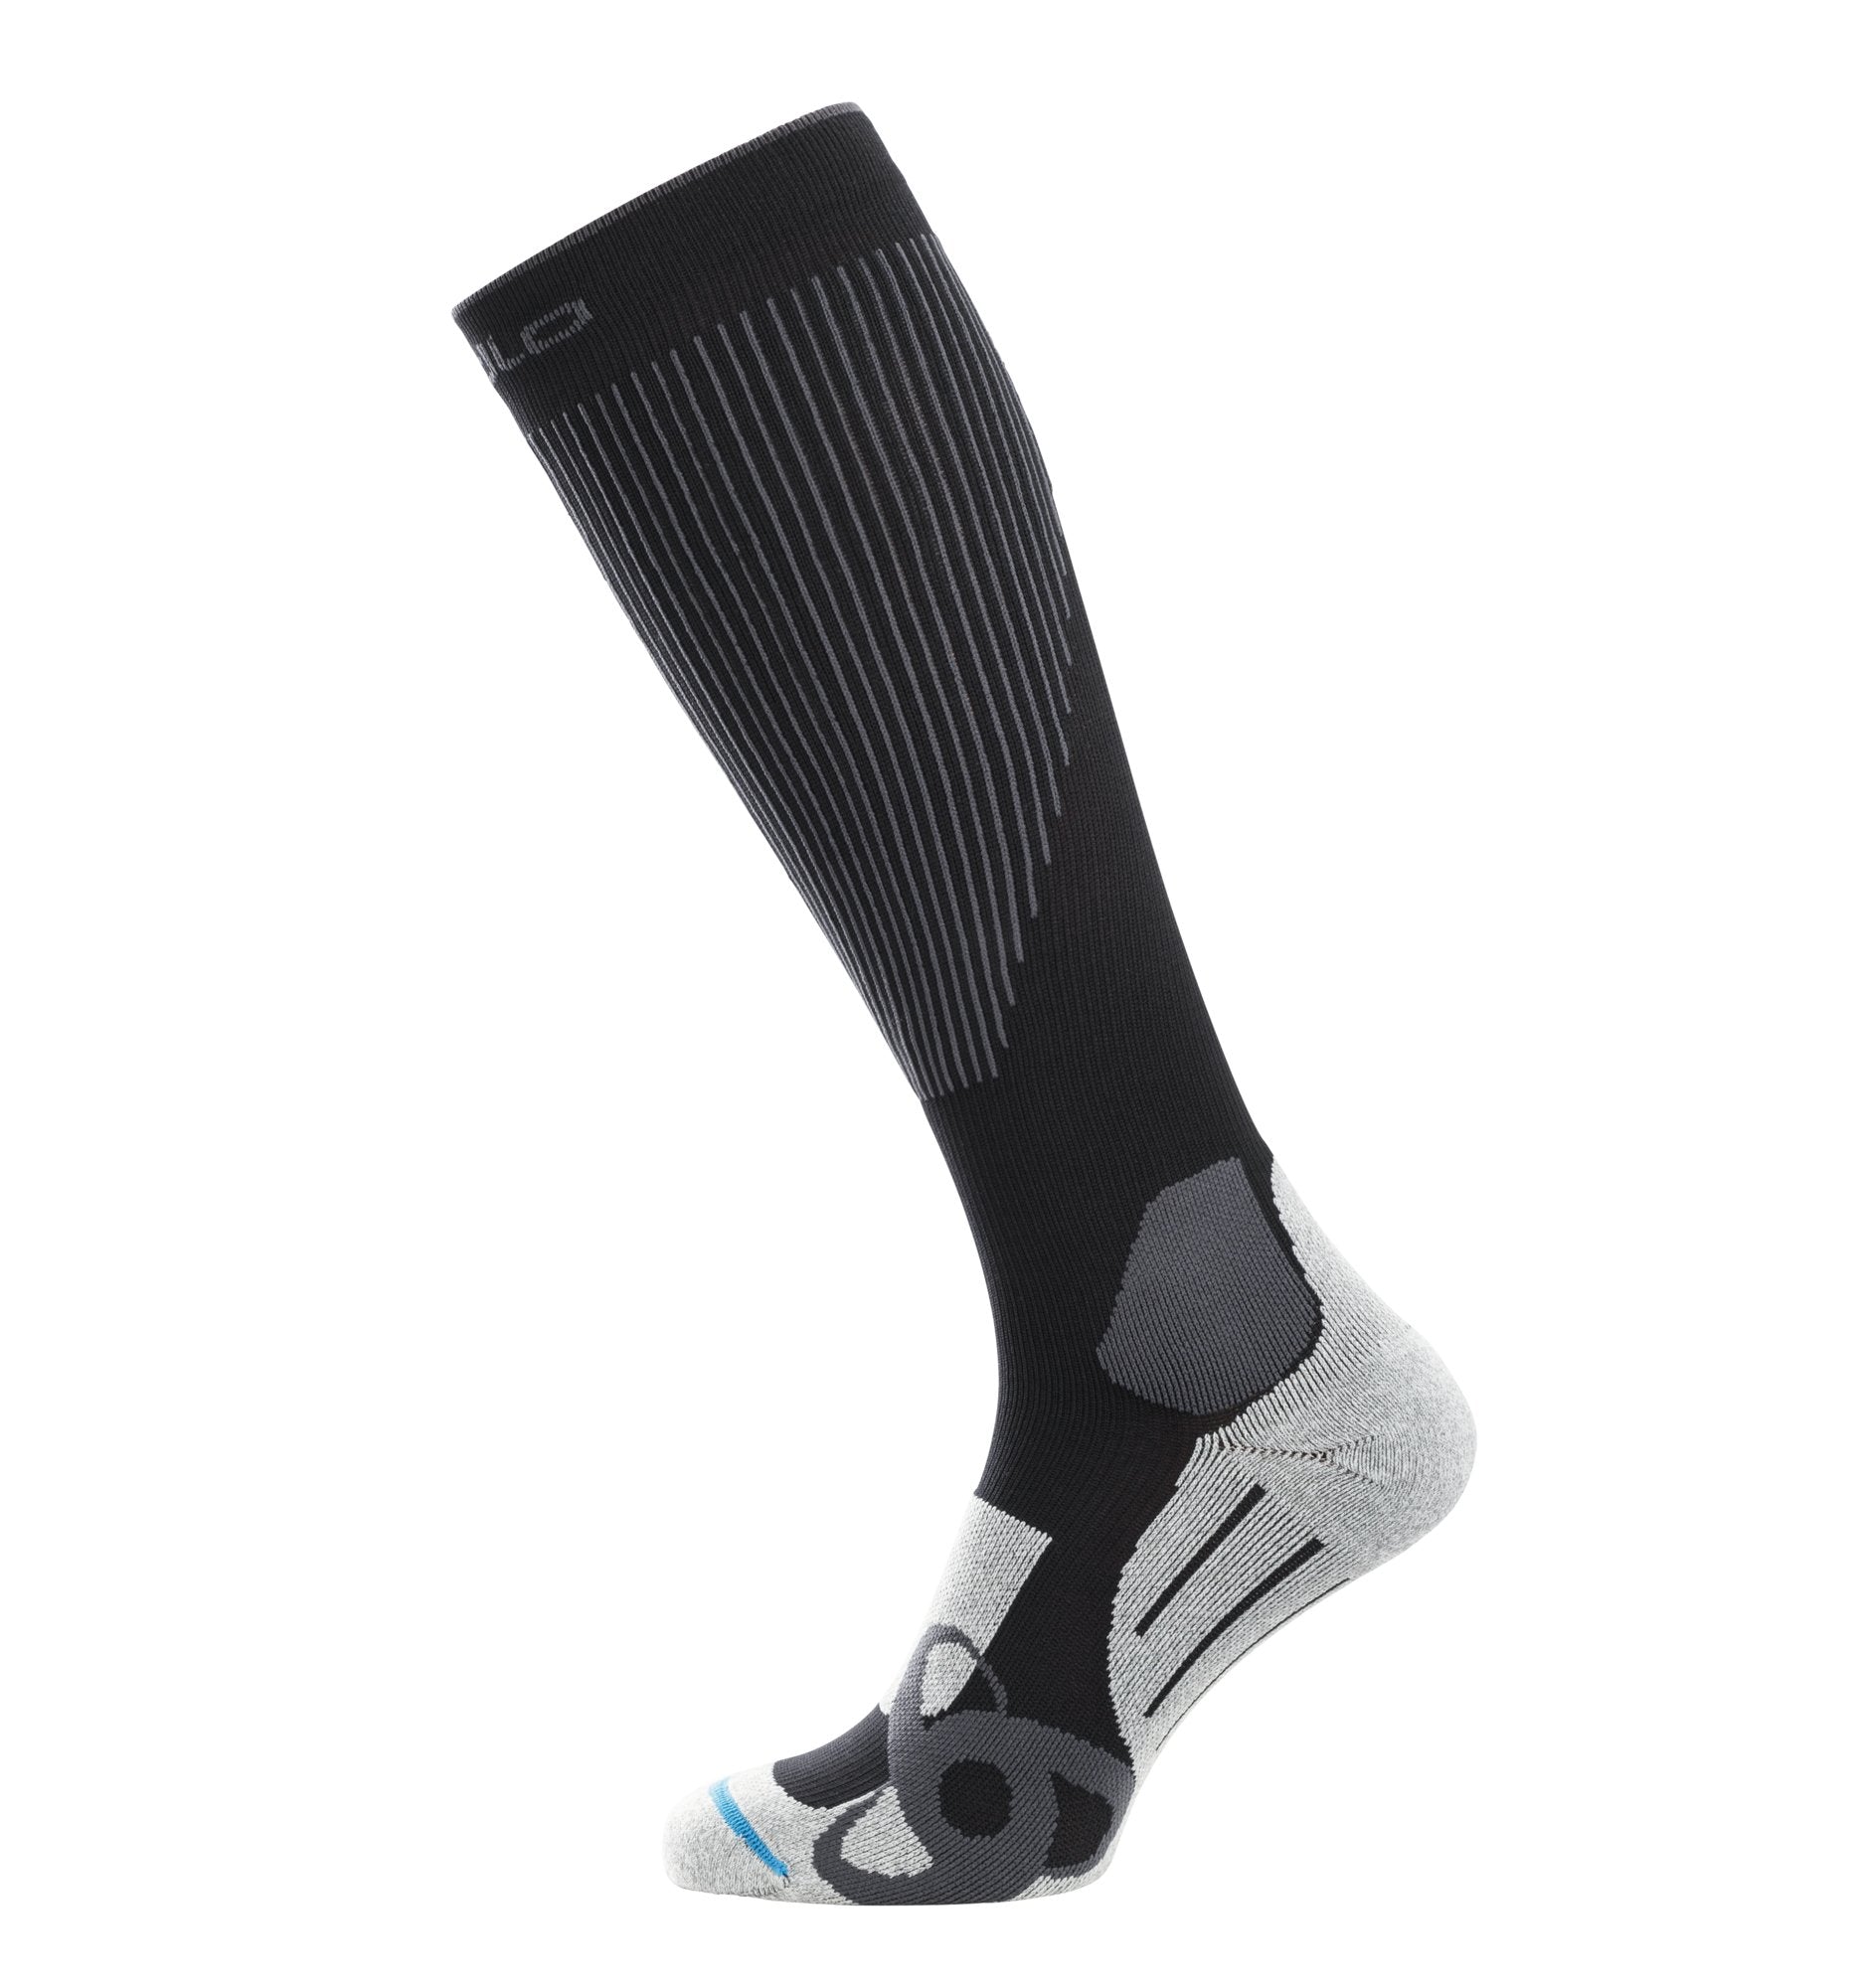 Odlo Men's and Women's Muscle Force Ski Socks